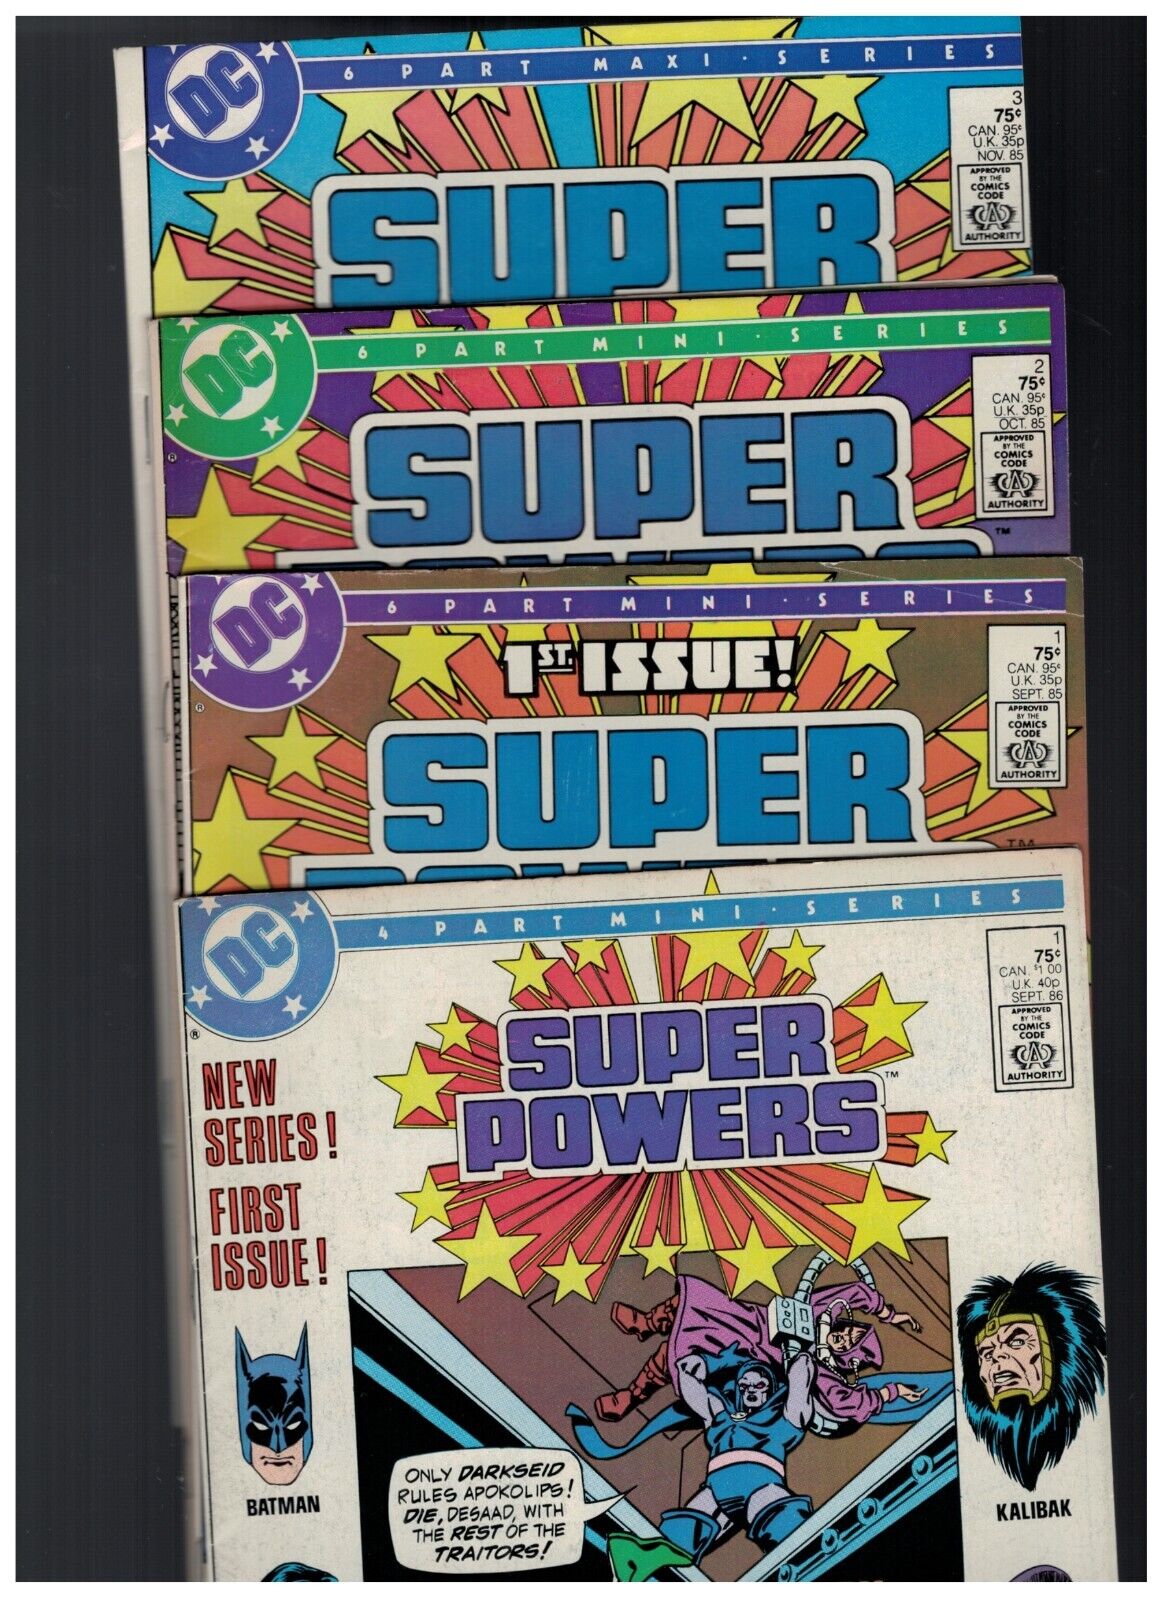 SUPER POWERS #1, #2, #3 (1985), SUPER POWERS #1 (1986) JACK KIRBY, INFANTINO 